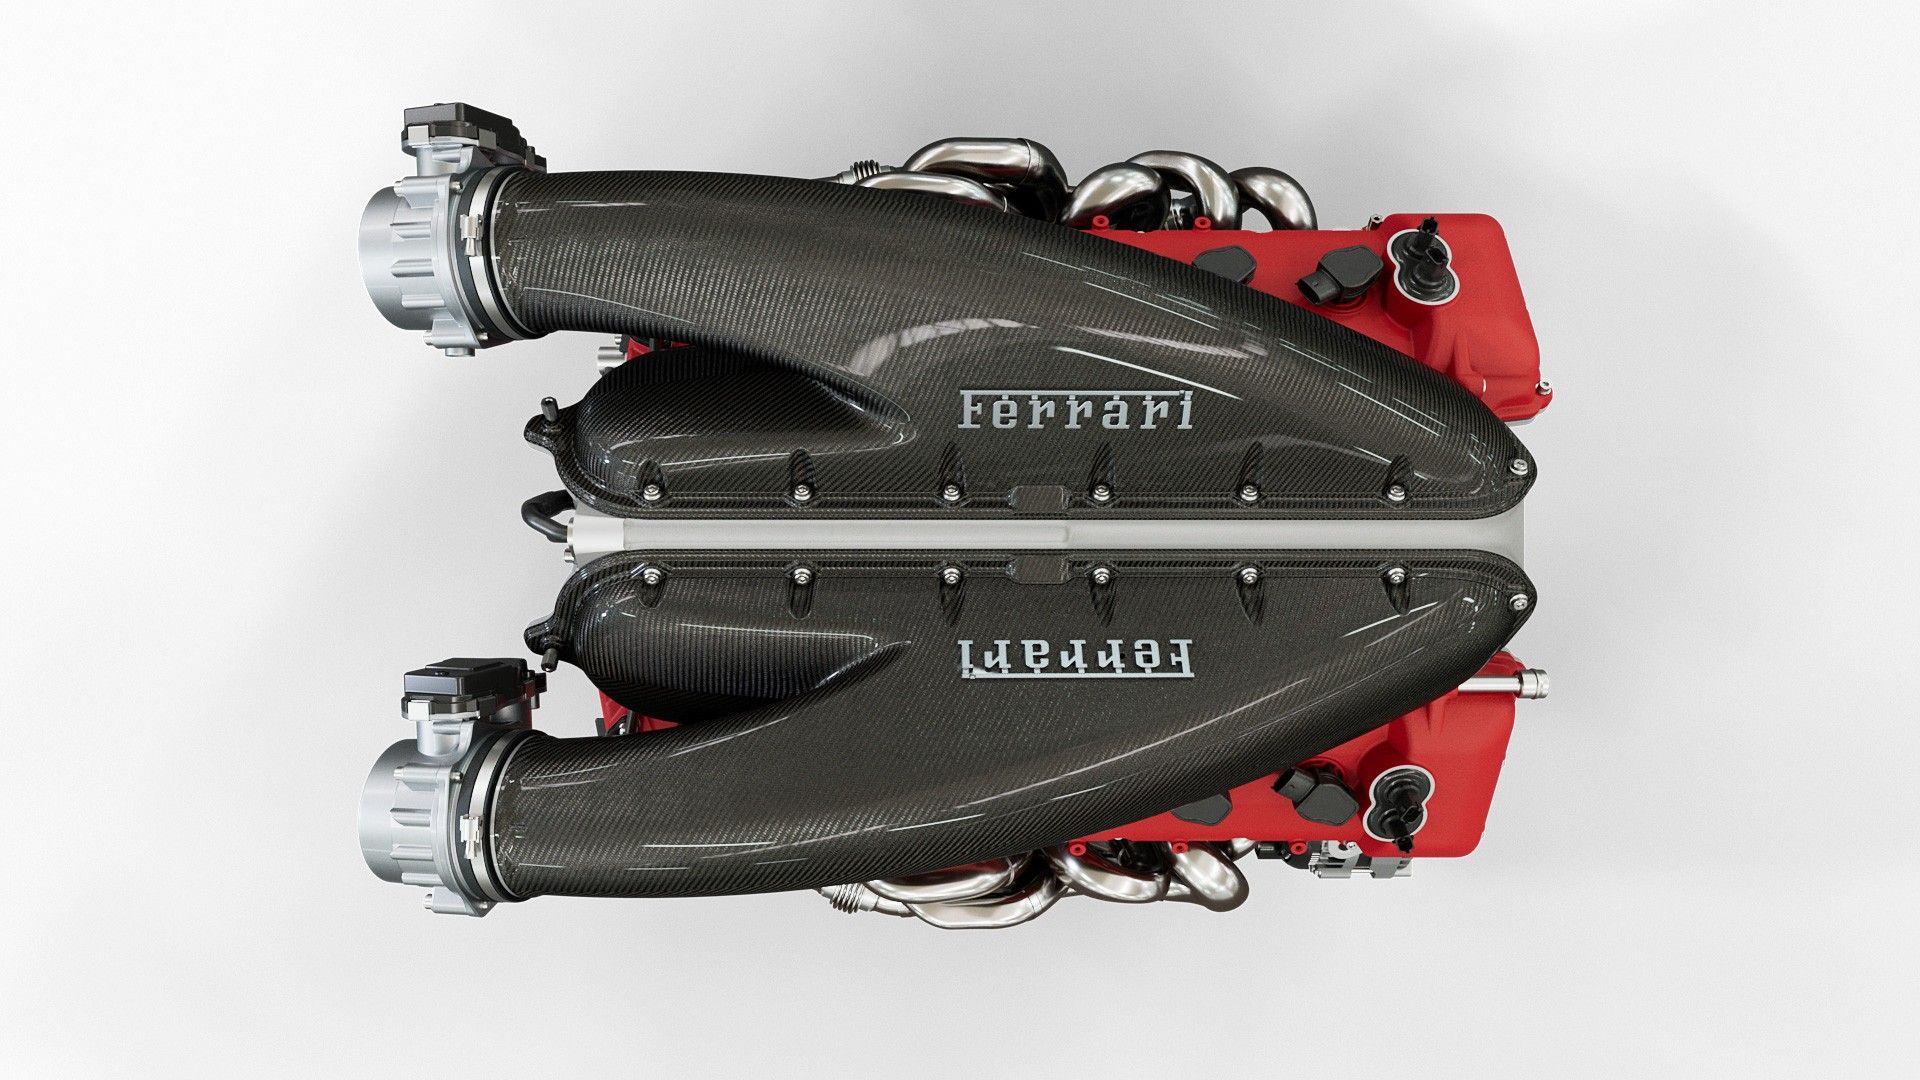 Ferrari Daytona SP3 engine (vmvirtualmachine)